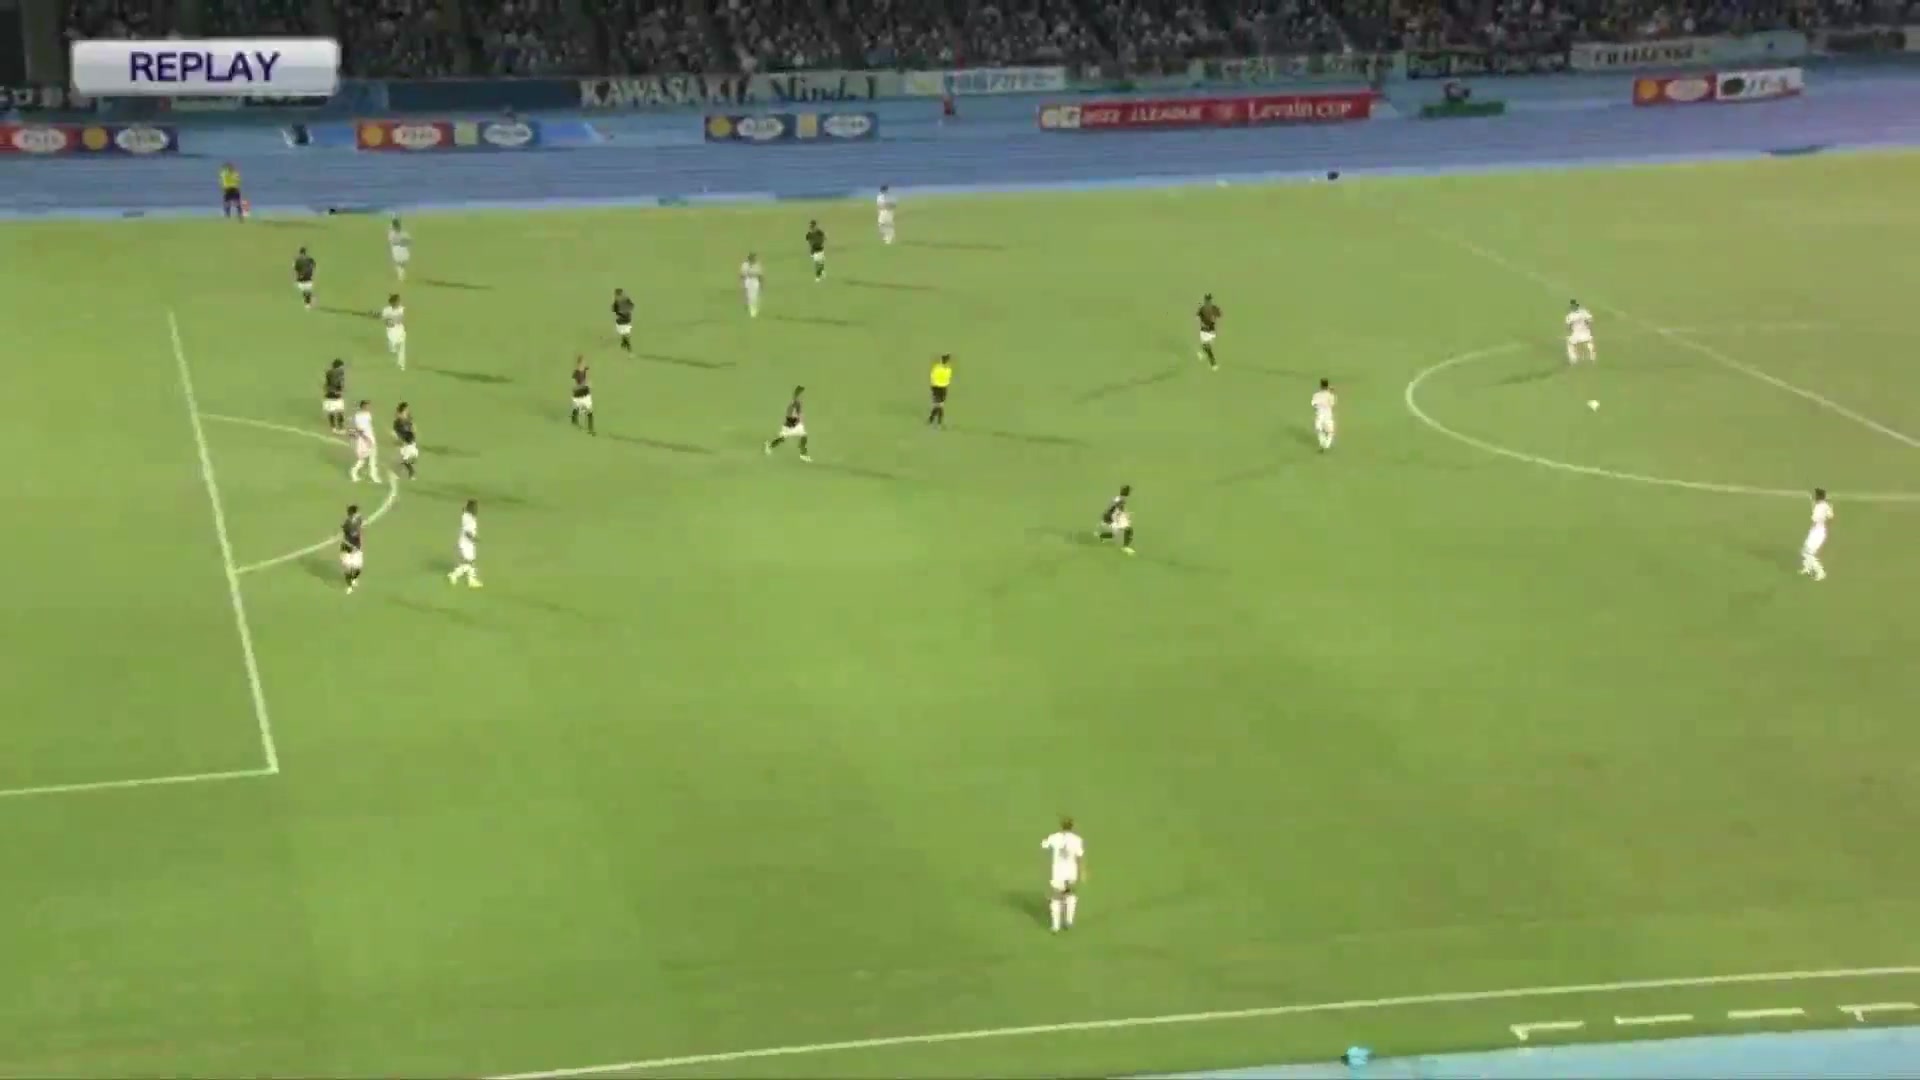 JPN LC Kawasaki Frontale Vs Cerezo Osaka Hiroto Yamada Goal in 89 min, Score 2:1